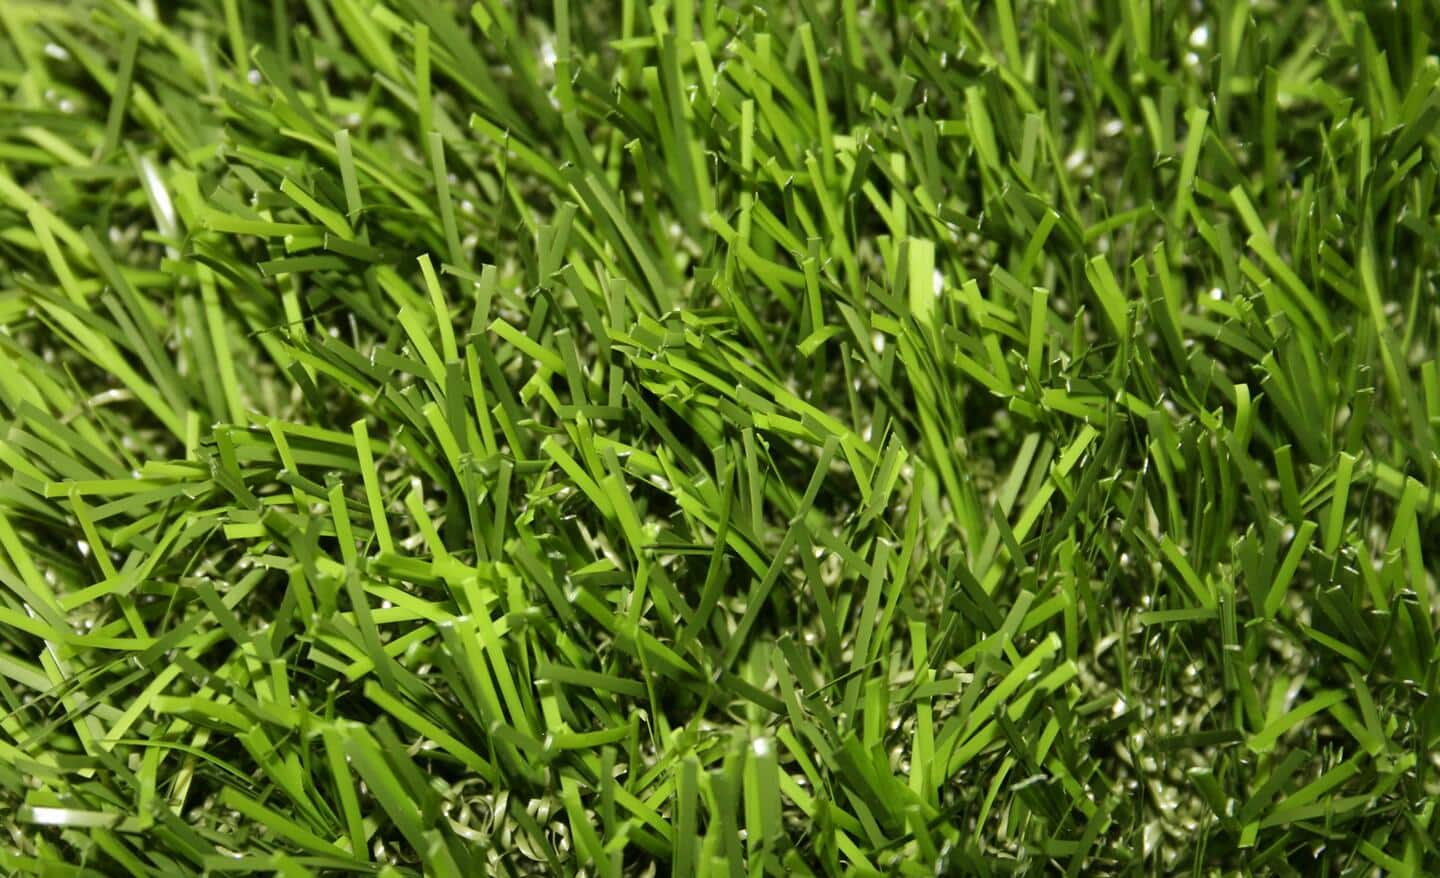 Centipede grass lawn